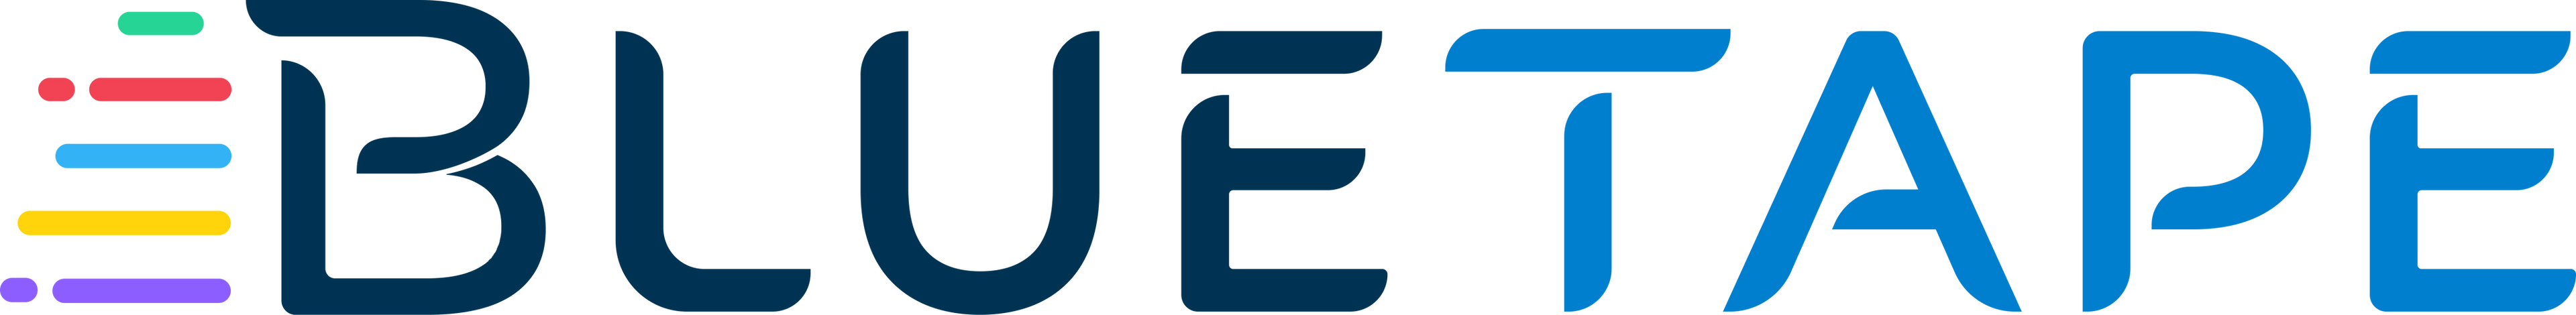 BlueTape logo